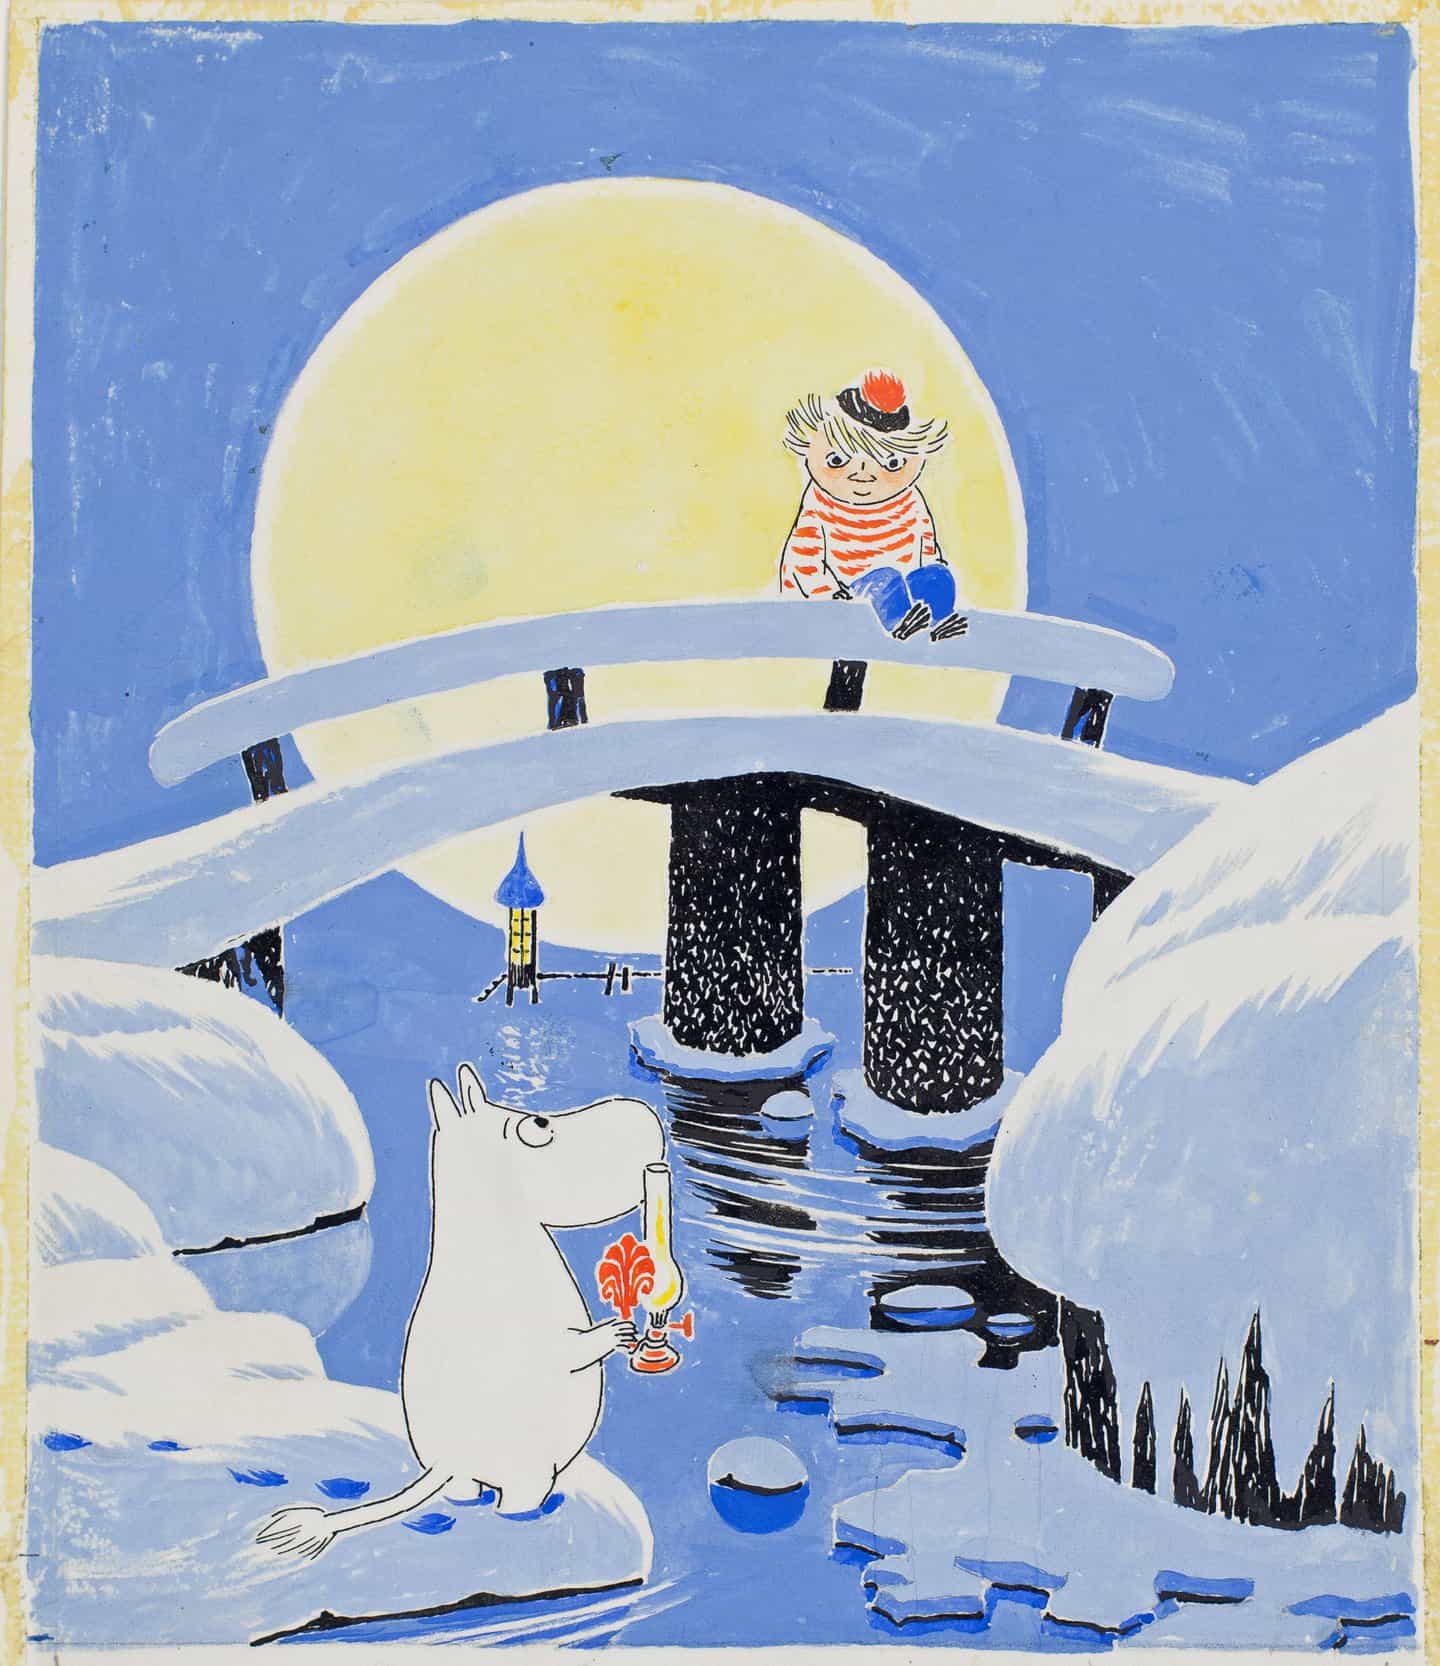 Tove Jansson: Trollvinter (Moominland Midwinter), a través de la colección del Museo Tampere Moomin (Copyright © Moomin Characters, 1957)